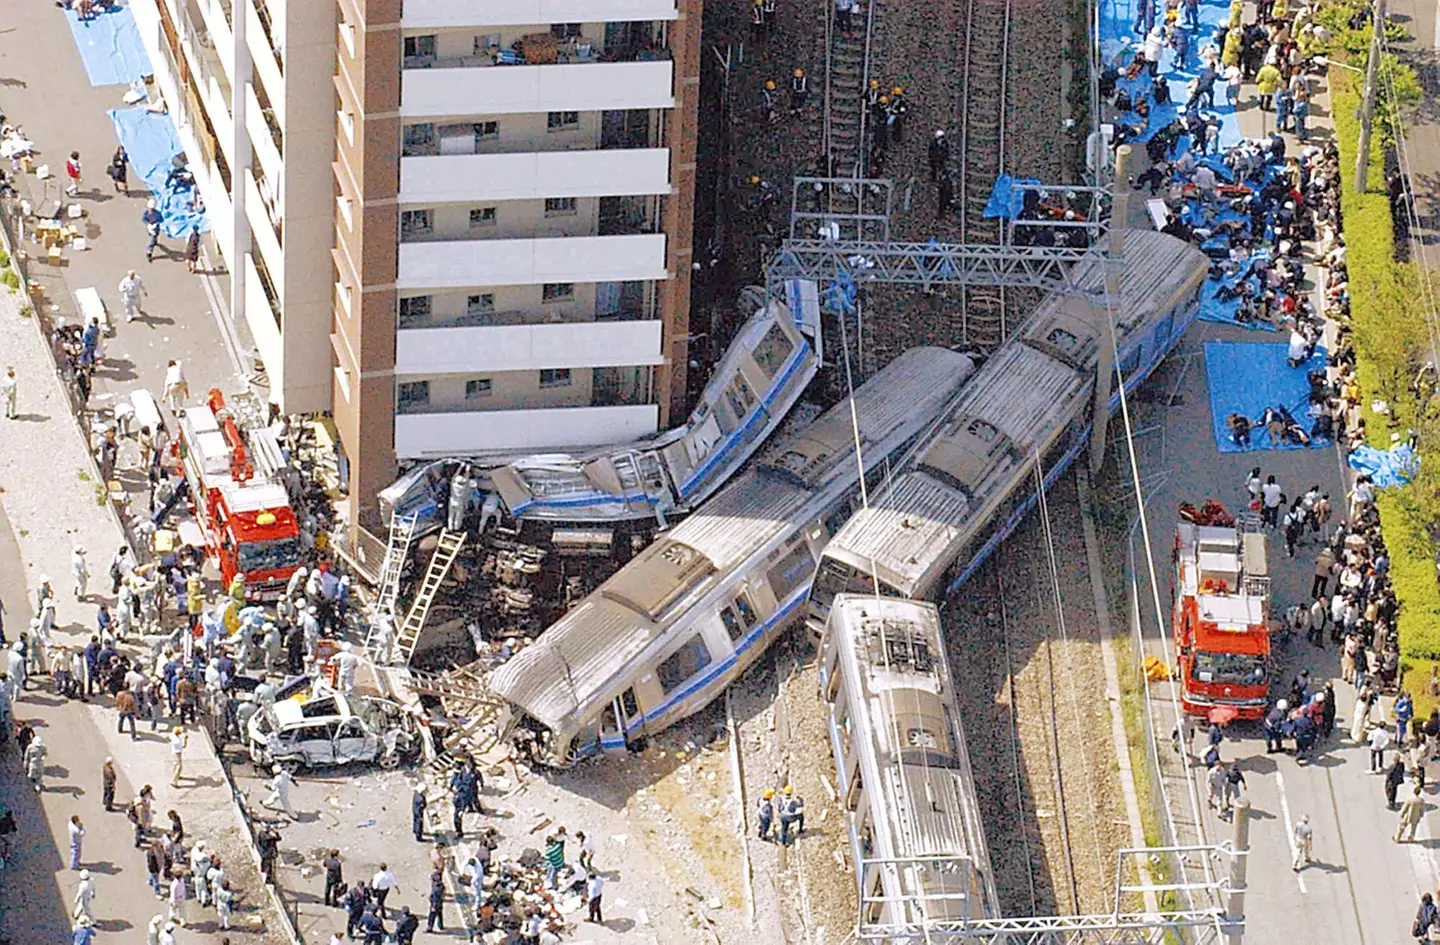 The Amagasaki derailment.